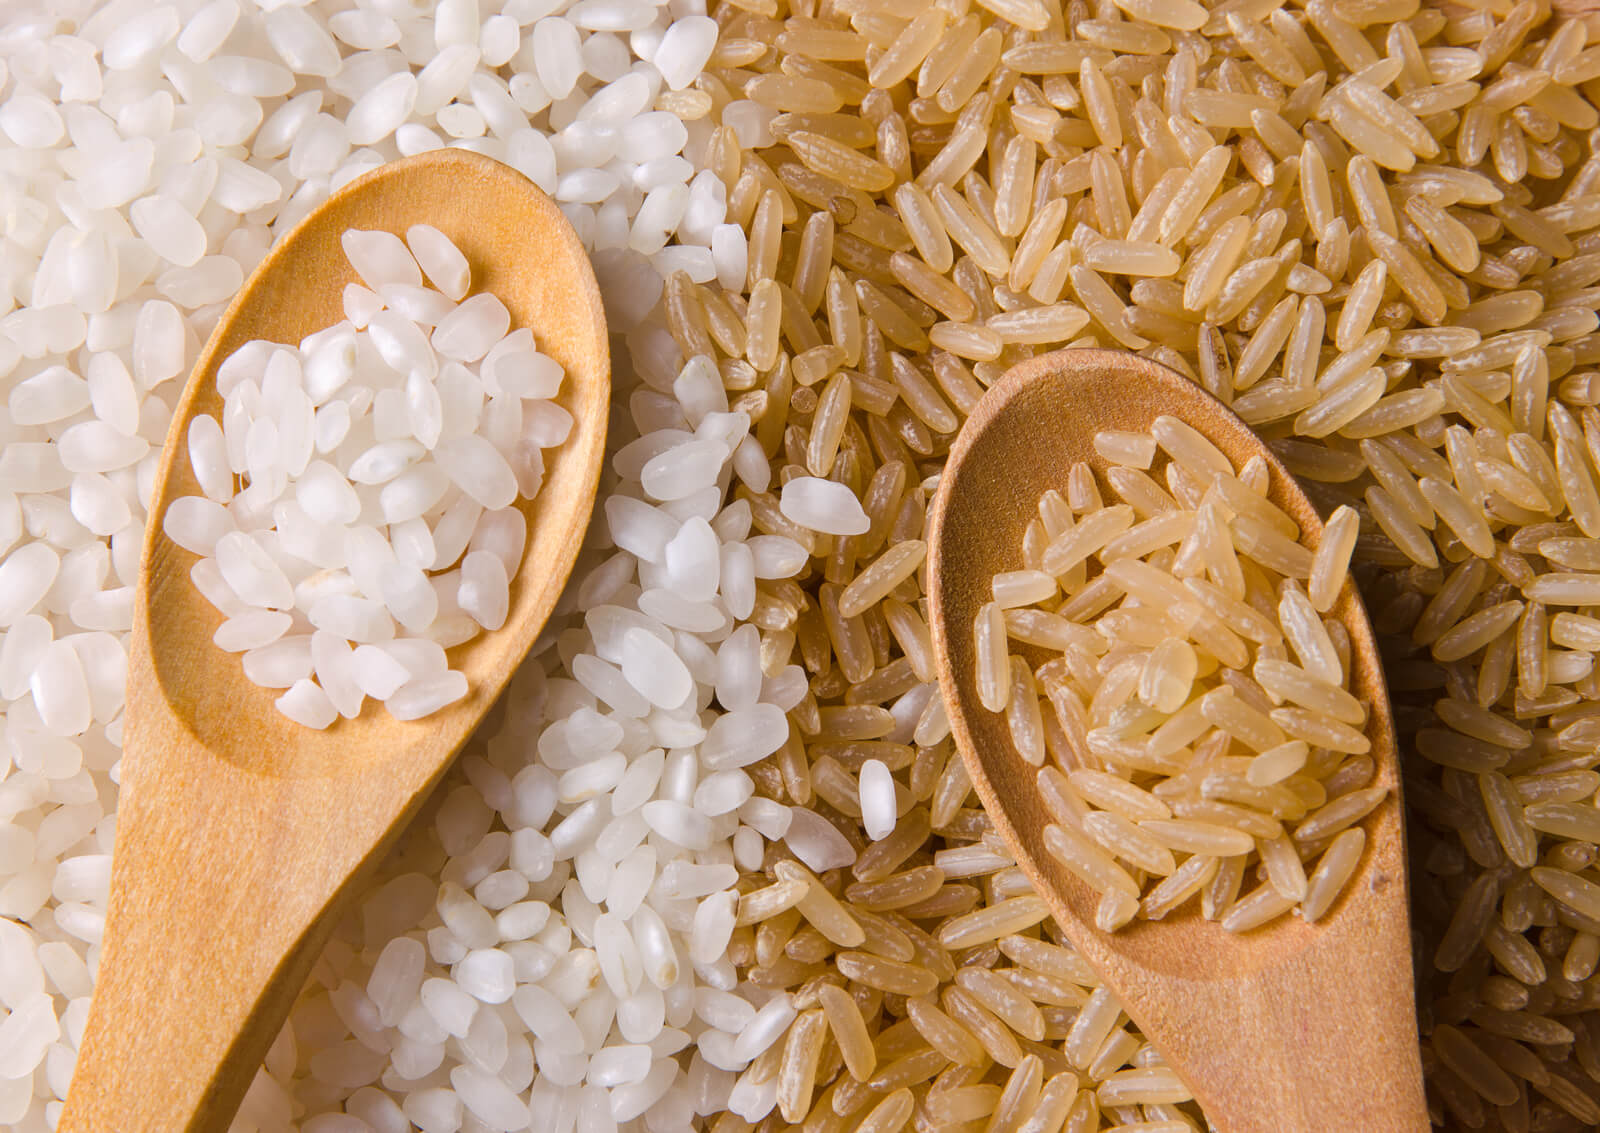 White rice versus brown